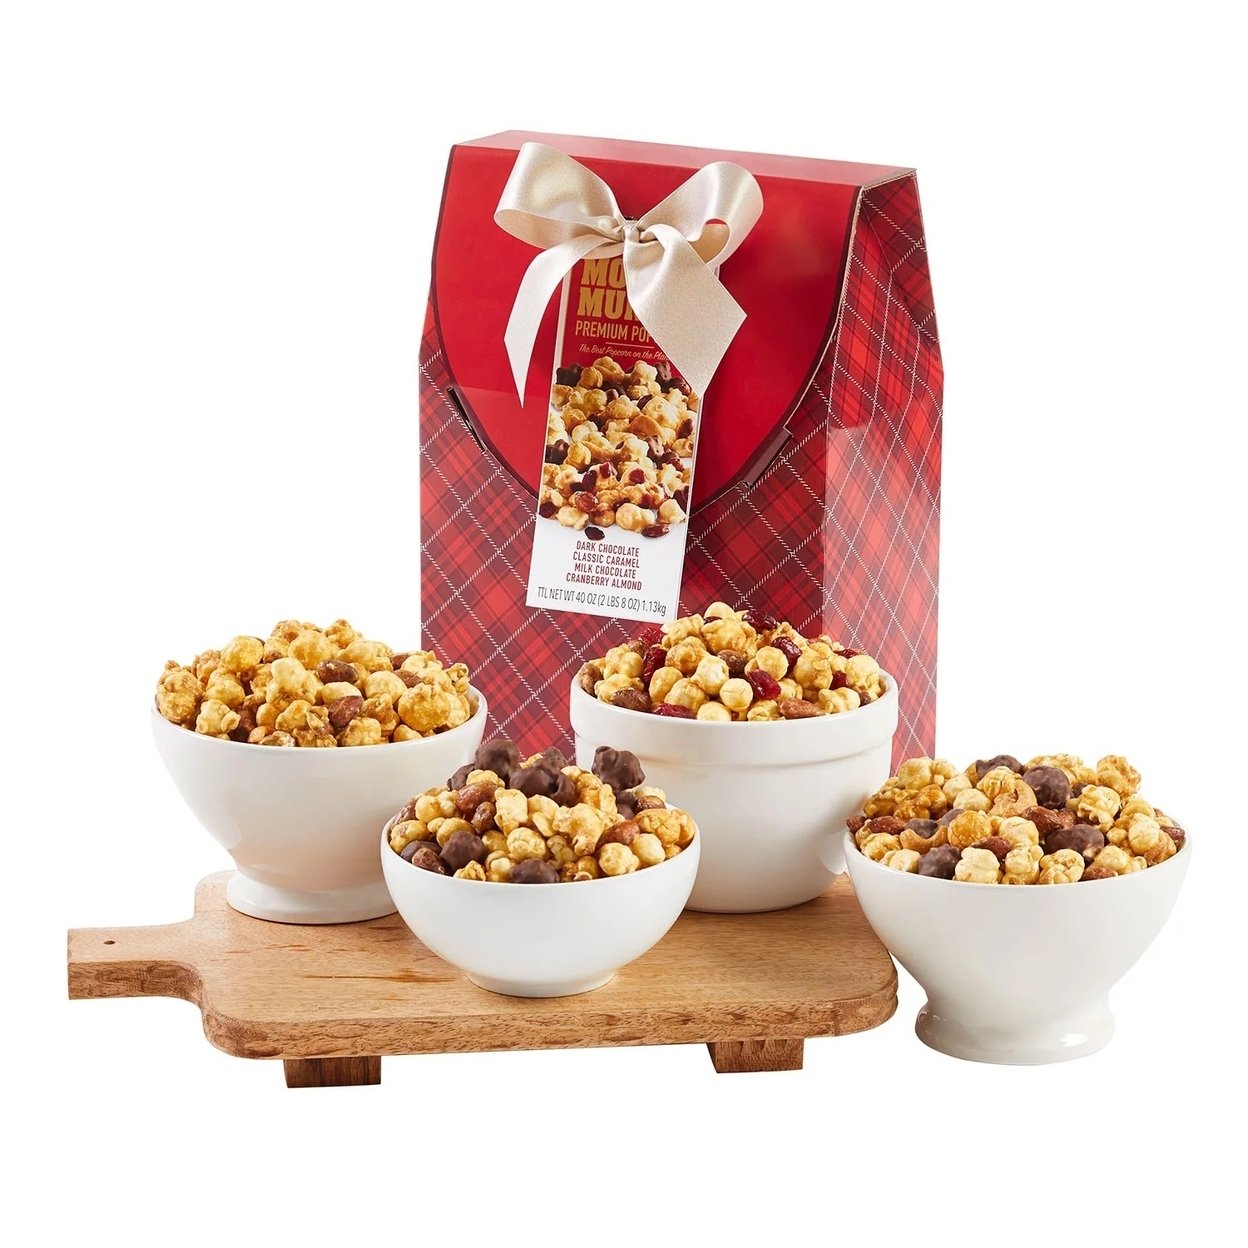 Harry & David Moose Munch Premium Popcorn Box Gift, 40 Ounce